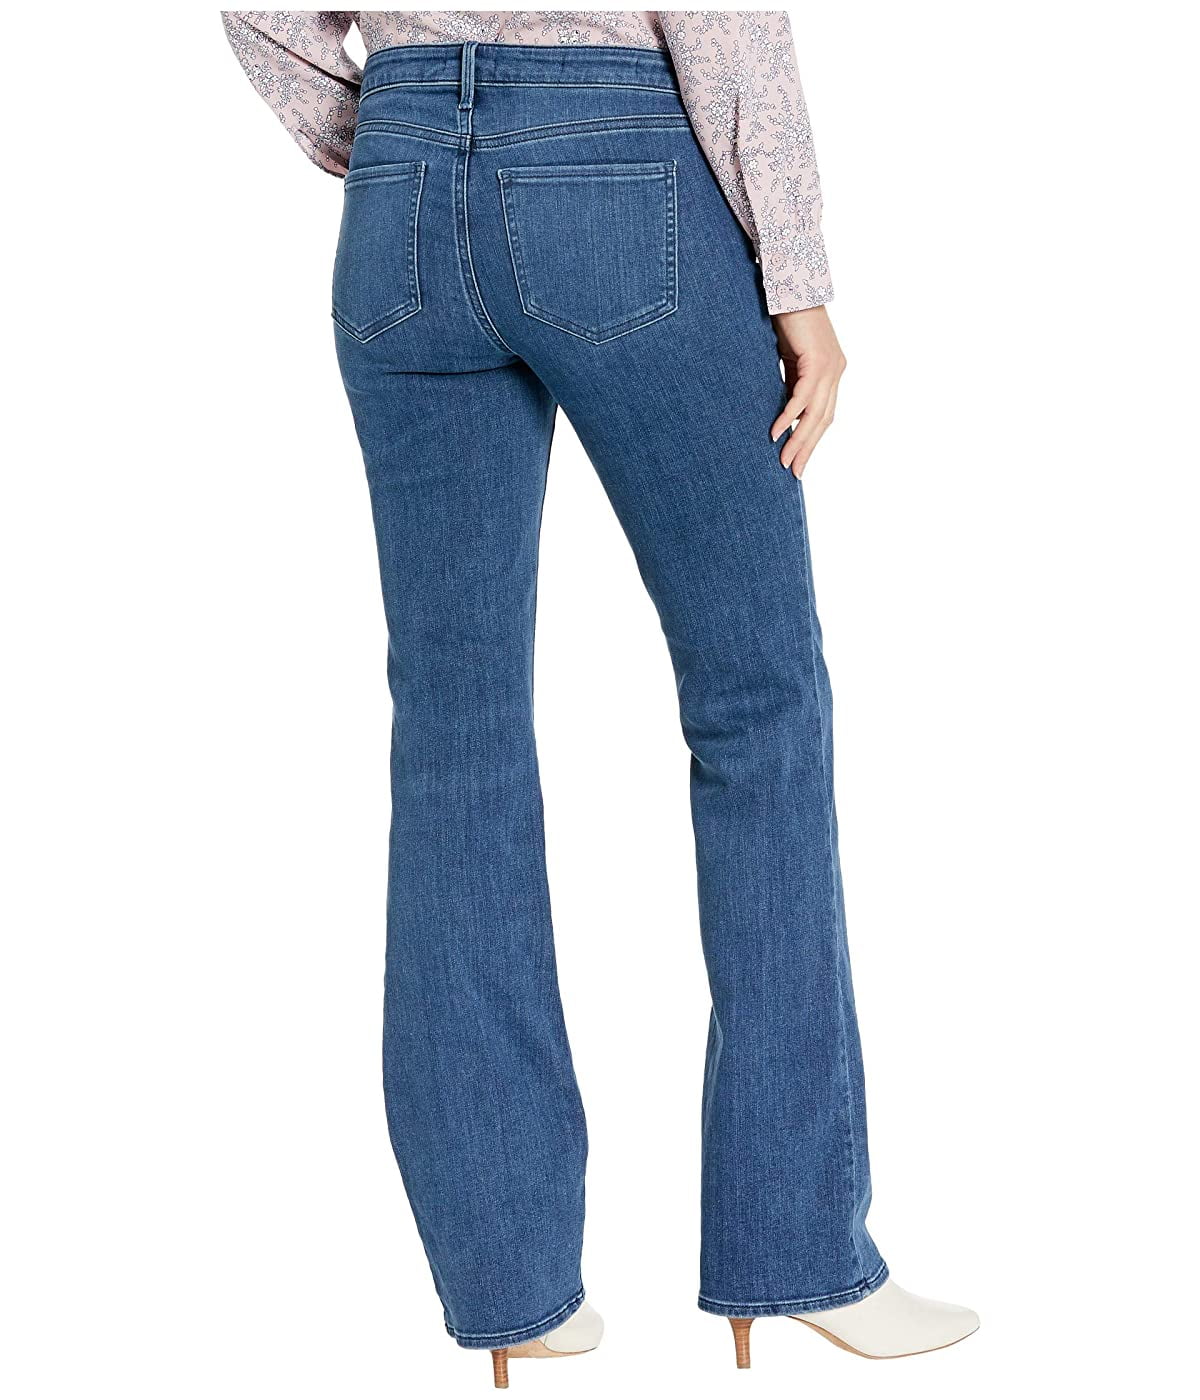 barbara bootcut jeans